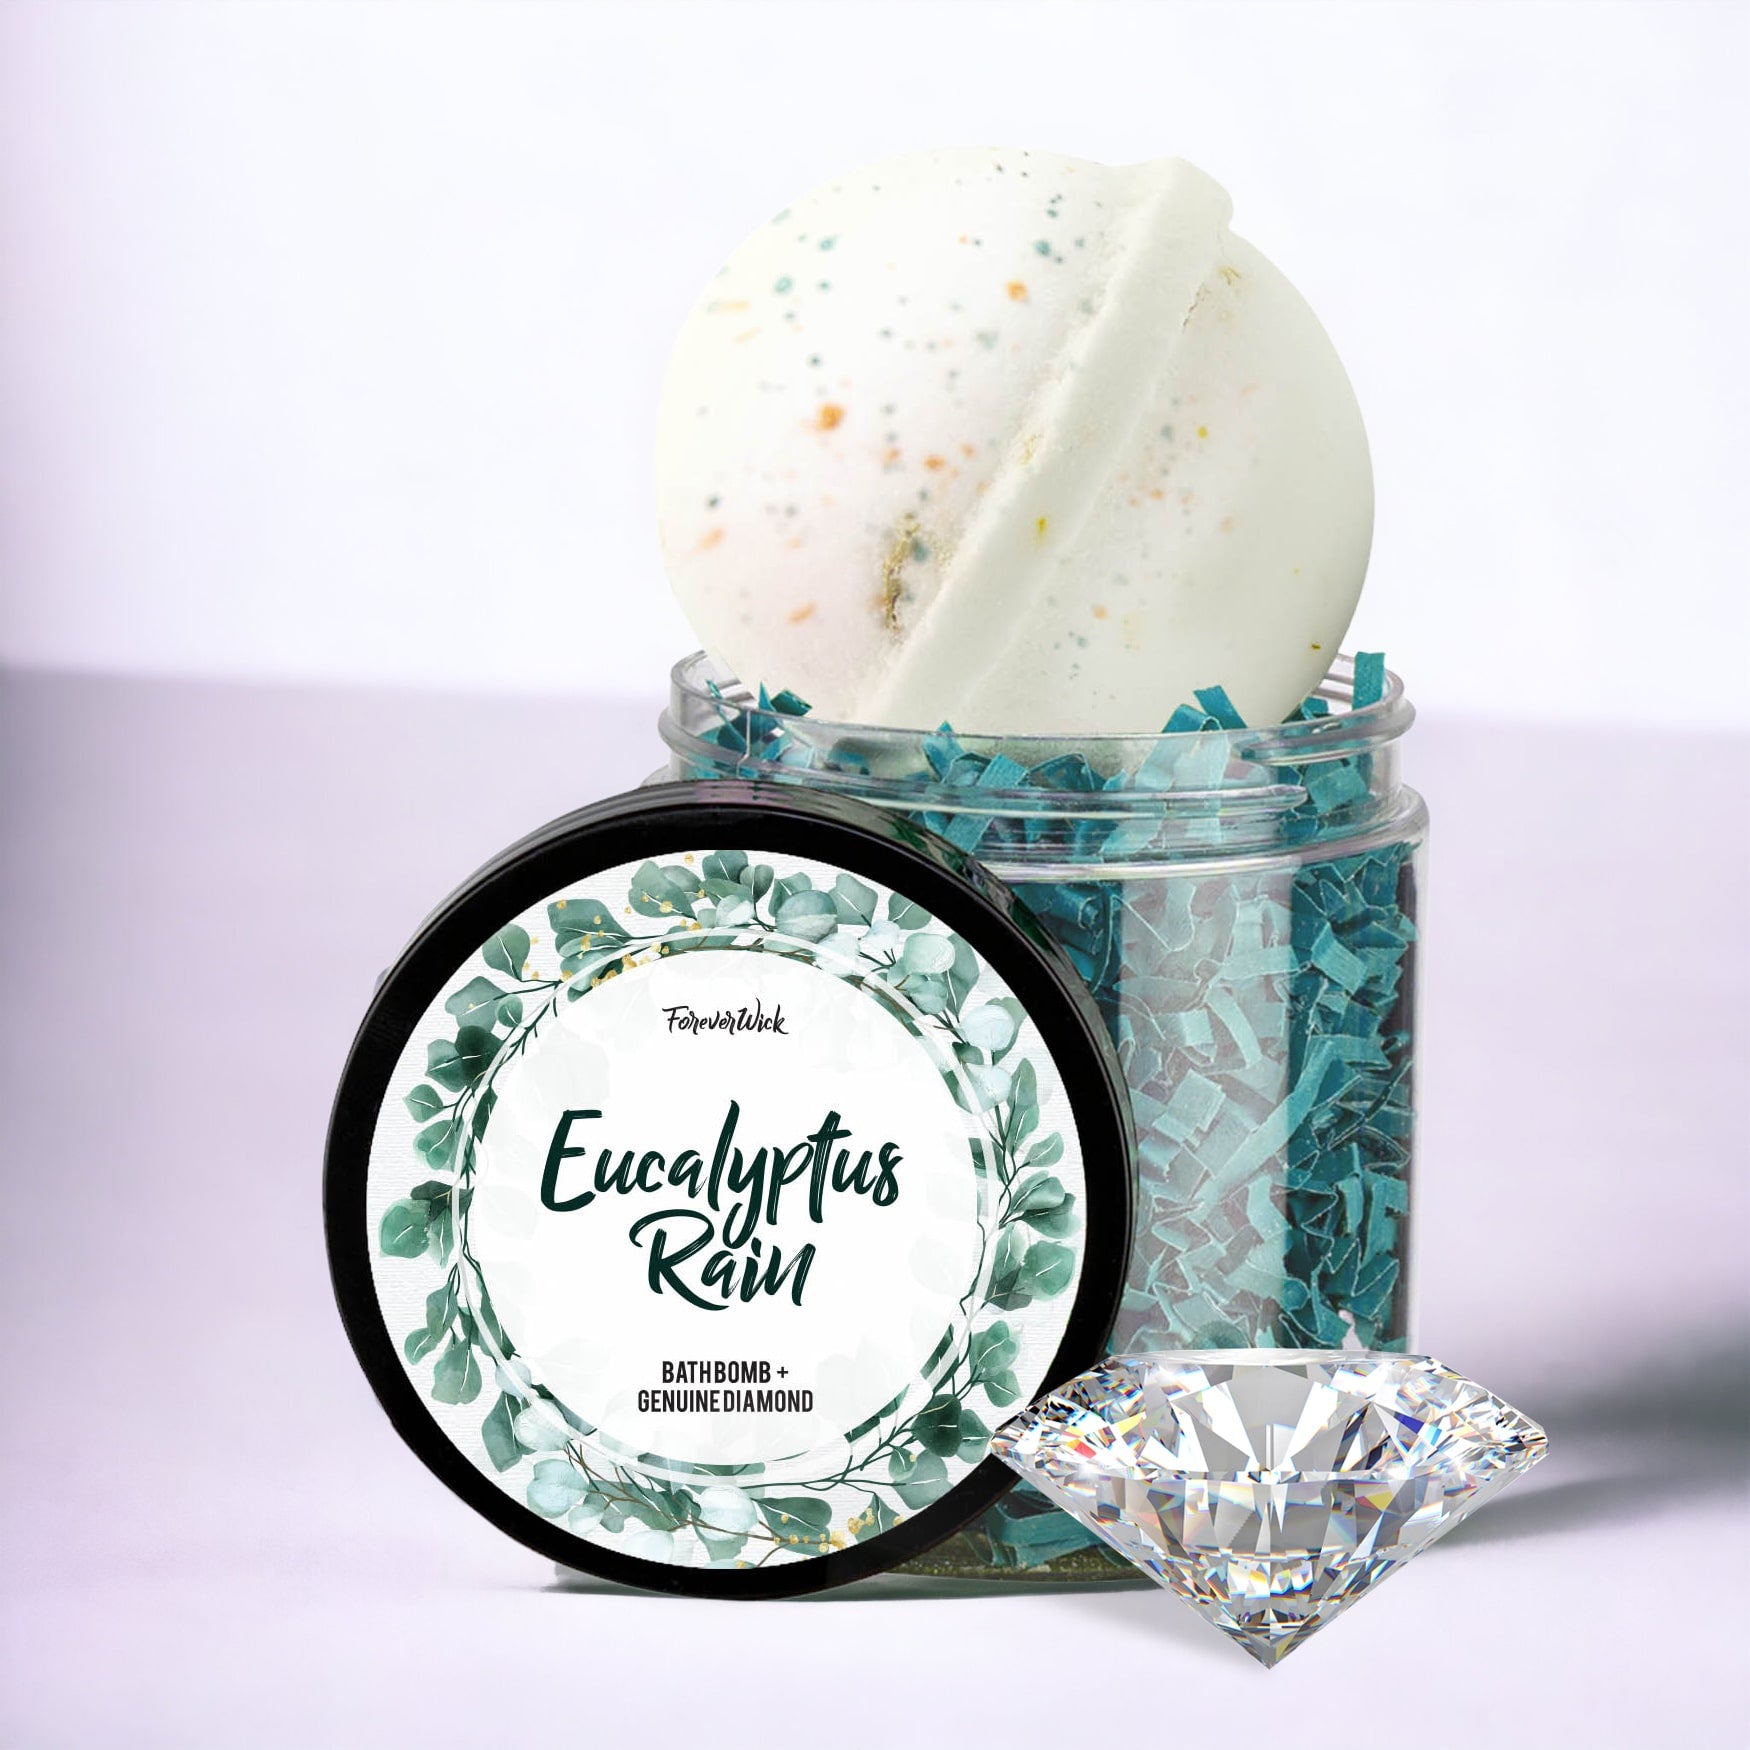 Eucalyptus Rain Luxury Bath Bomb + Genuine Diamond